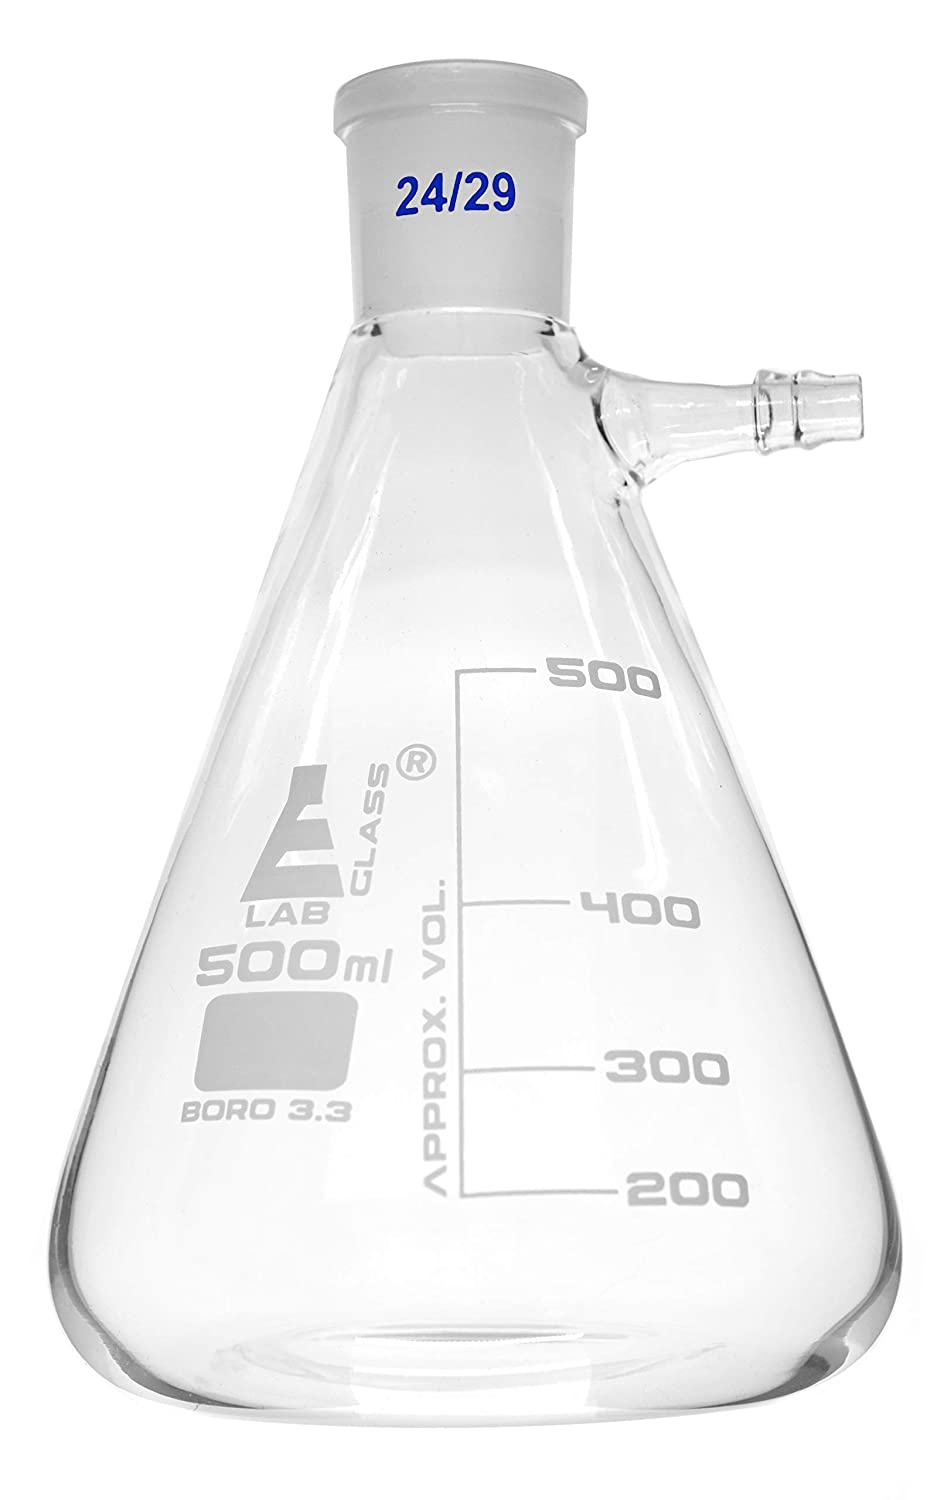 Lab Filter Flask Borosilicate Glass Vacuum Flask